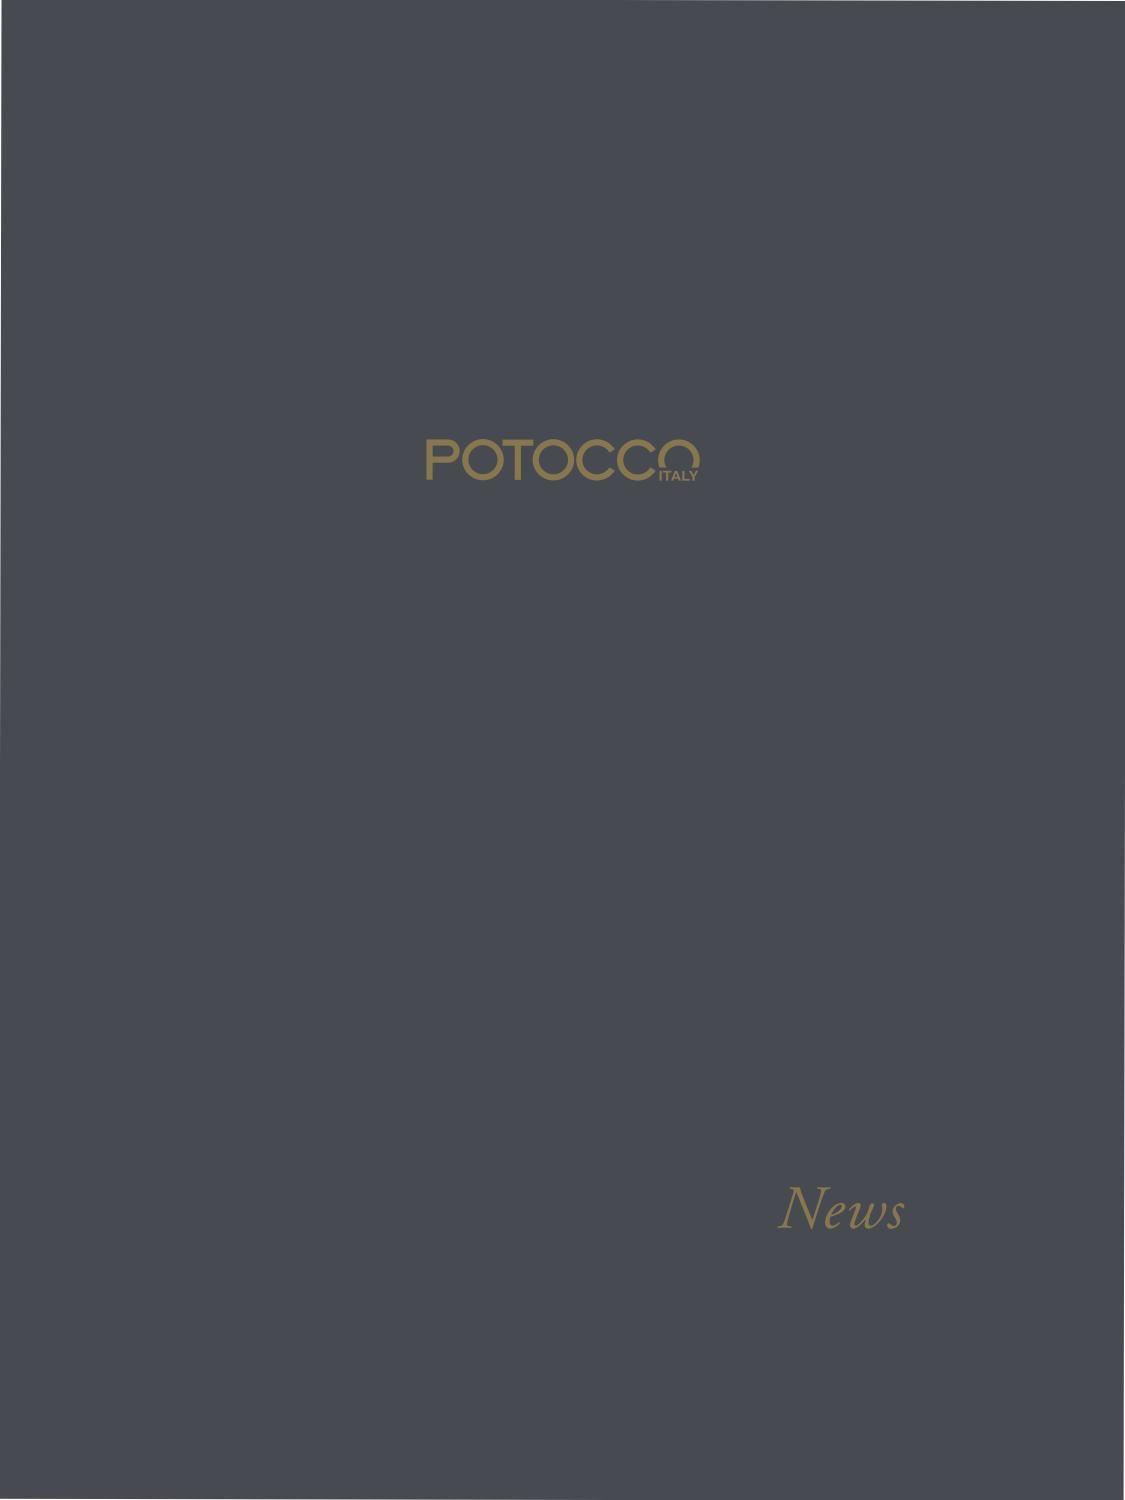 Potocco Logo - Potocco Catalogue NEWS 2017